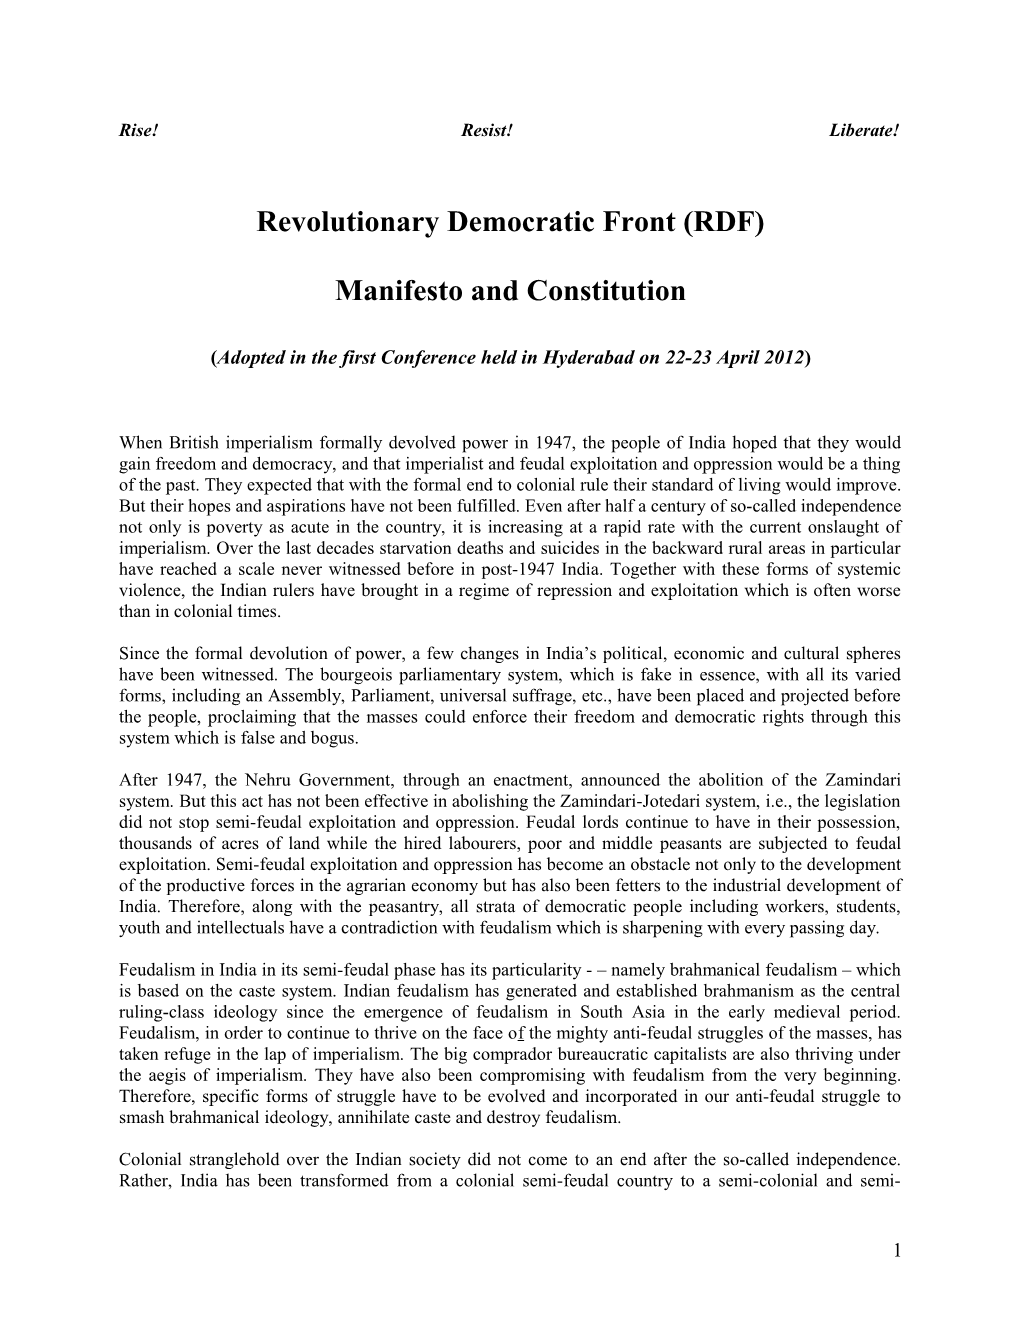 Draft Manifesto of Rdf